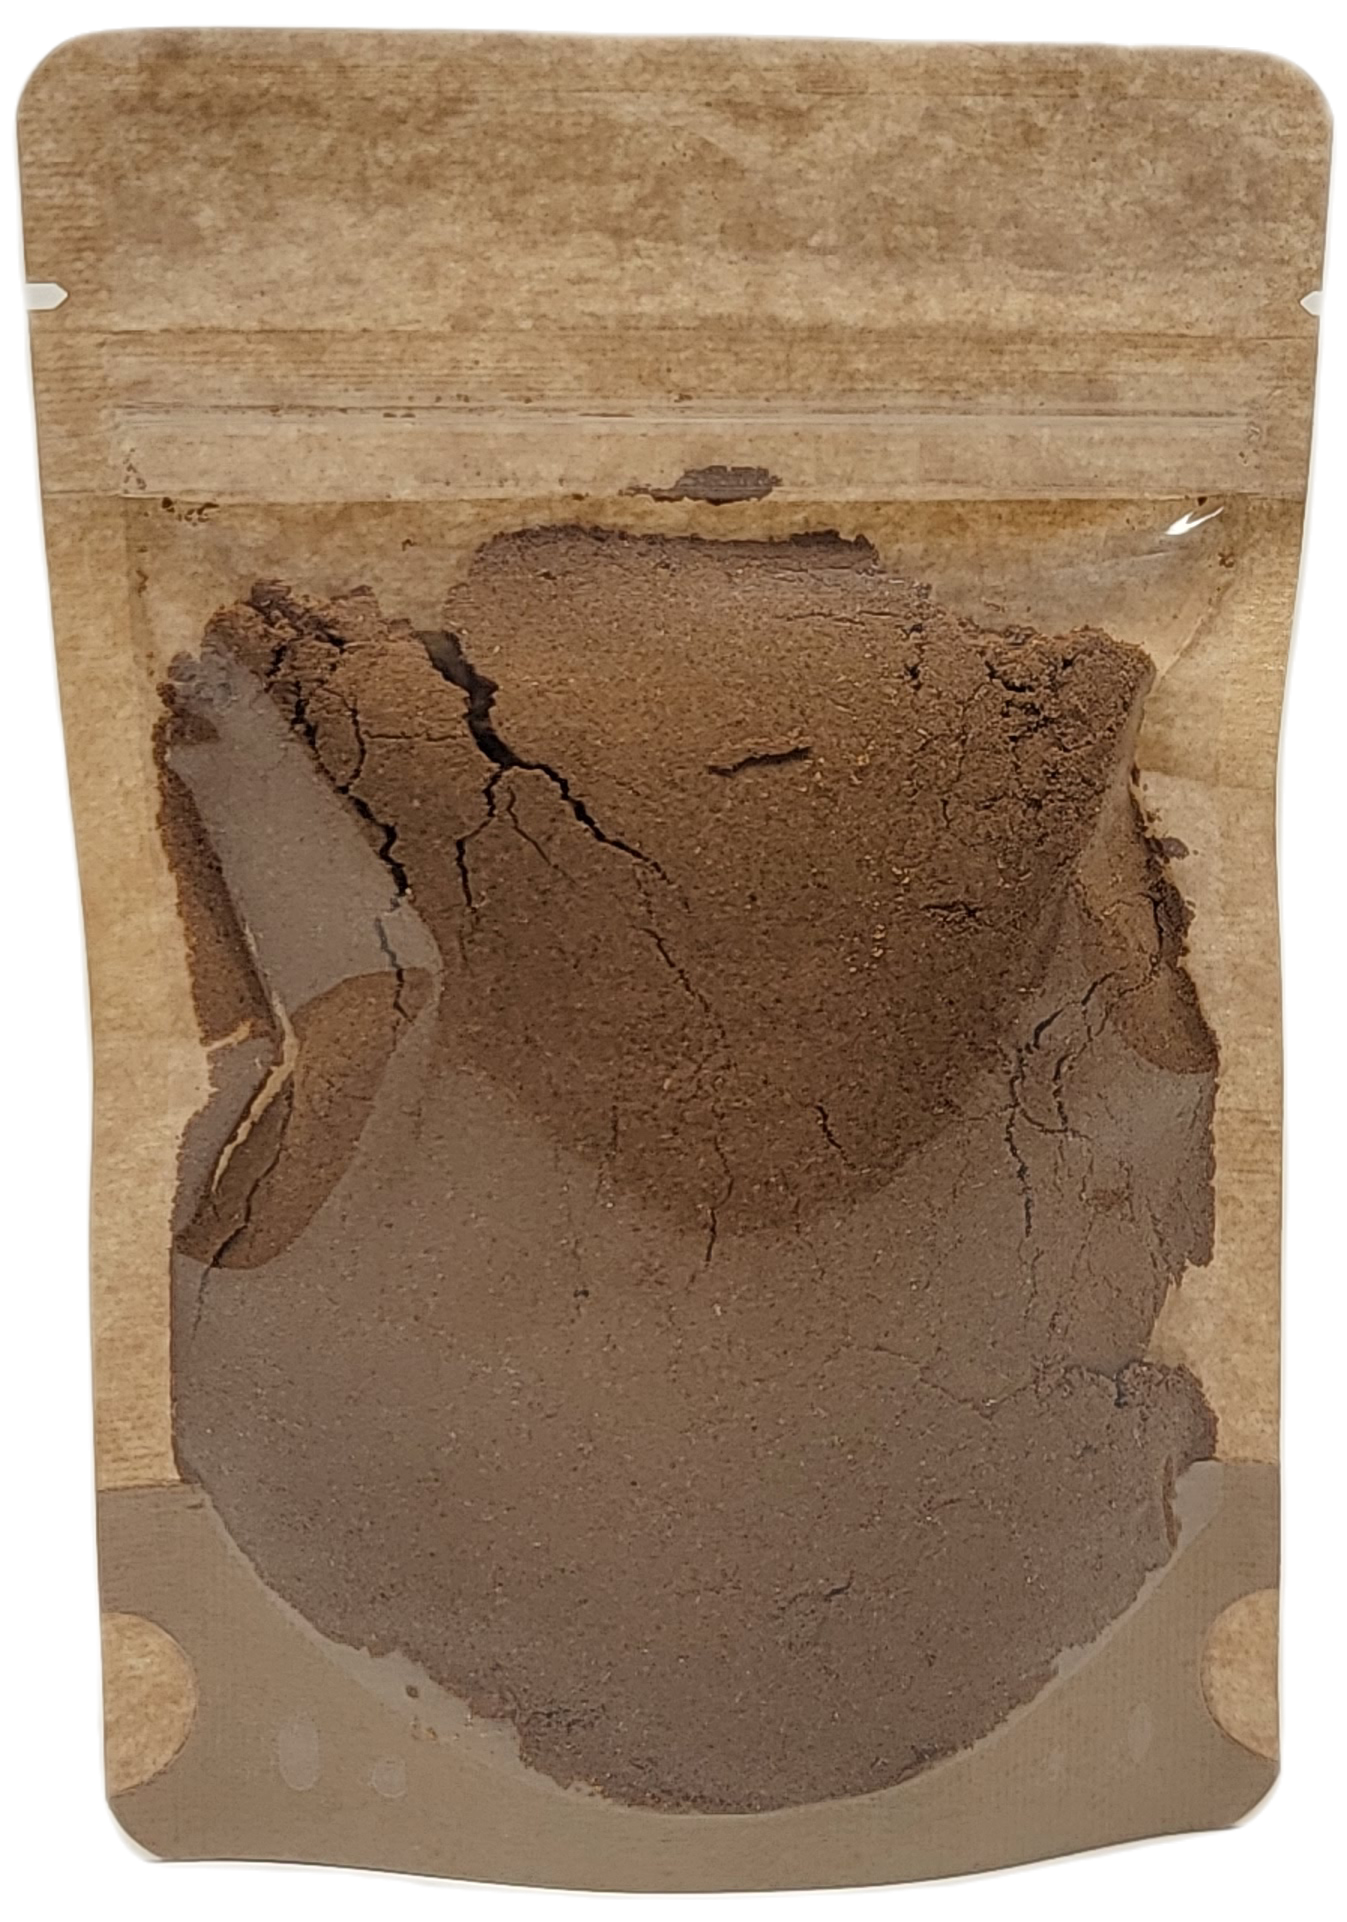 Cramp bark Organic powder wildcrafted